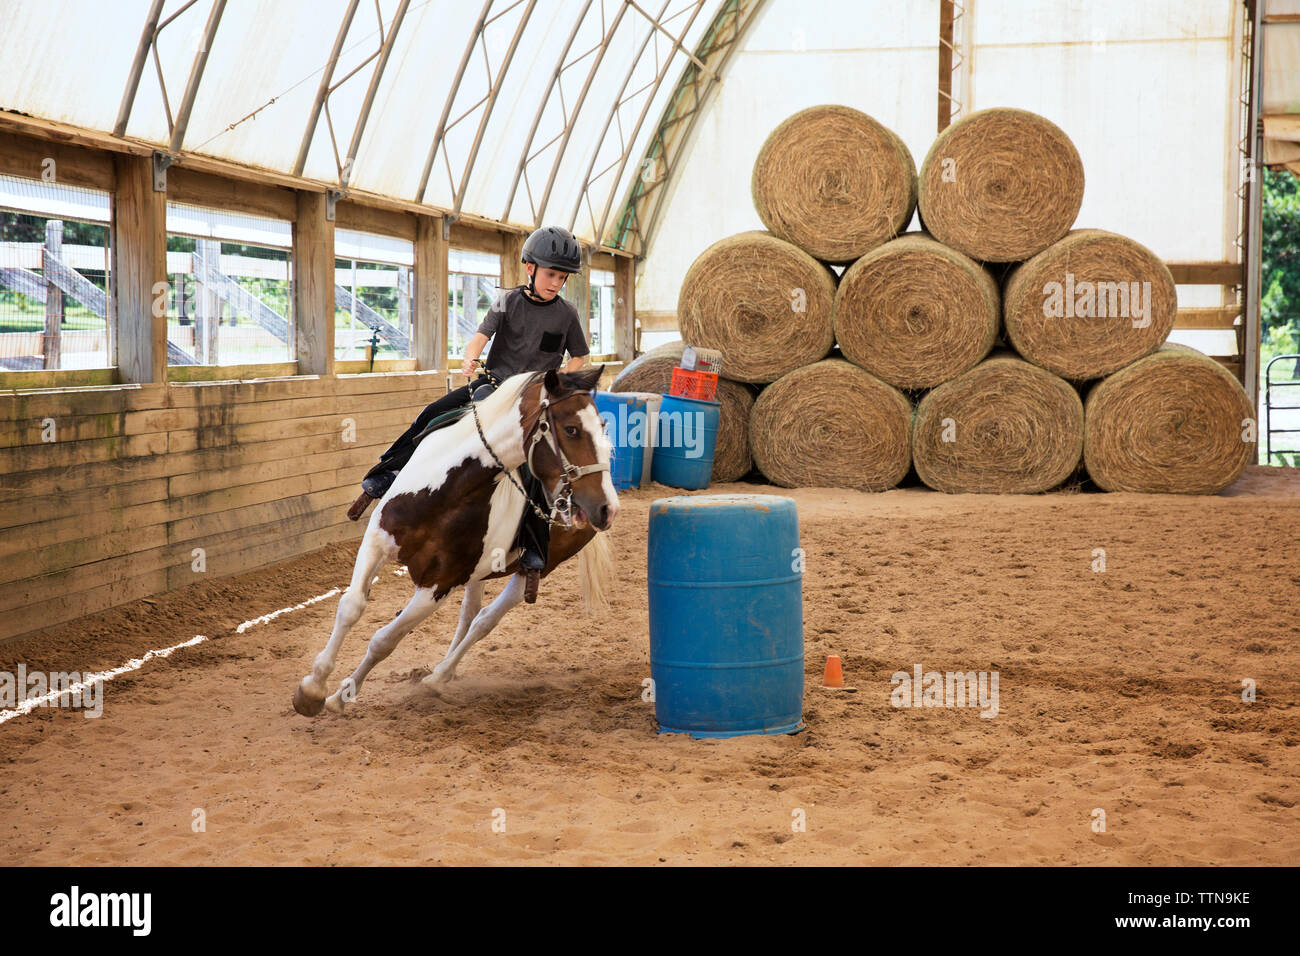 Boy riding horse in ranch Stock Photo